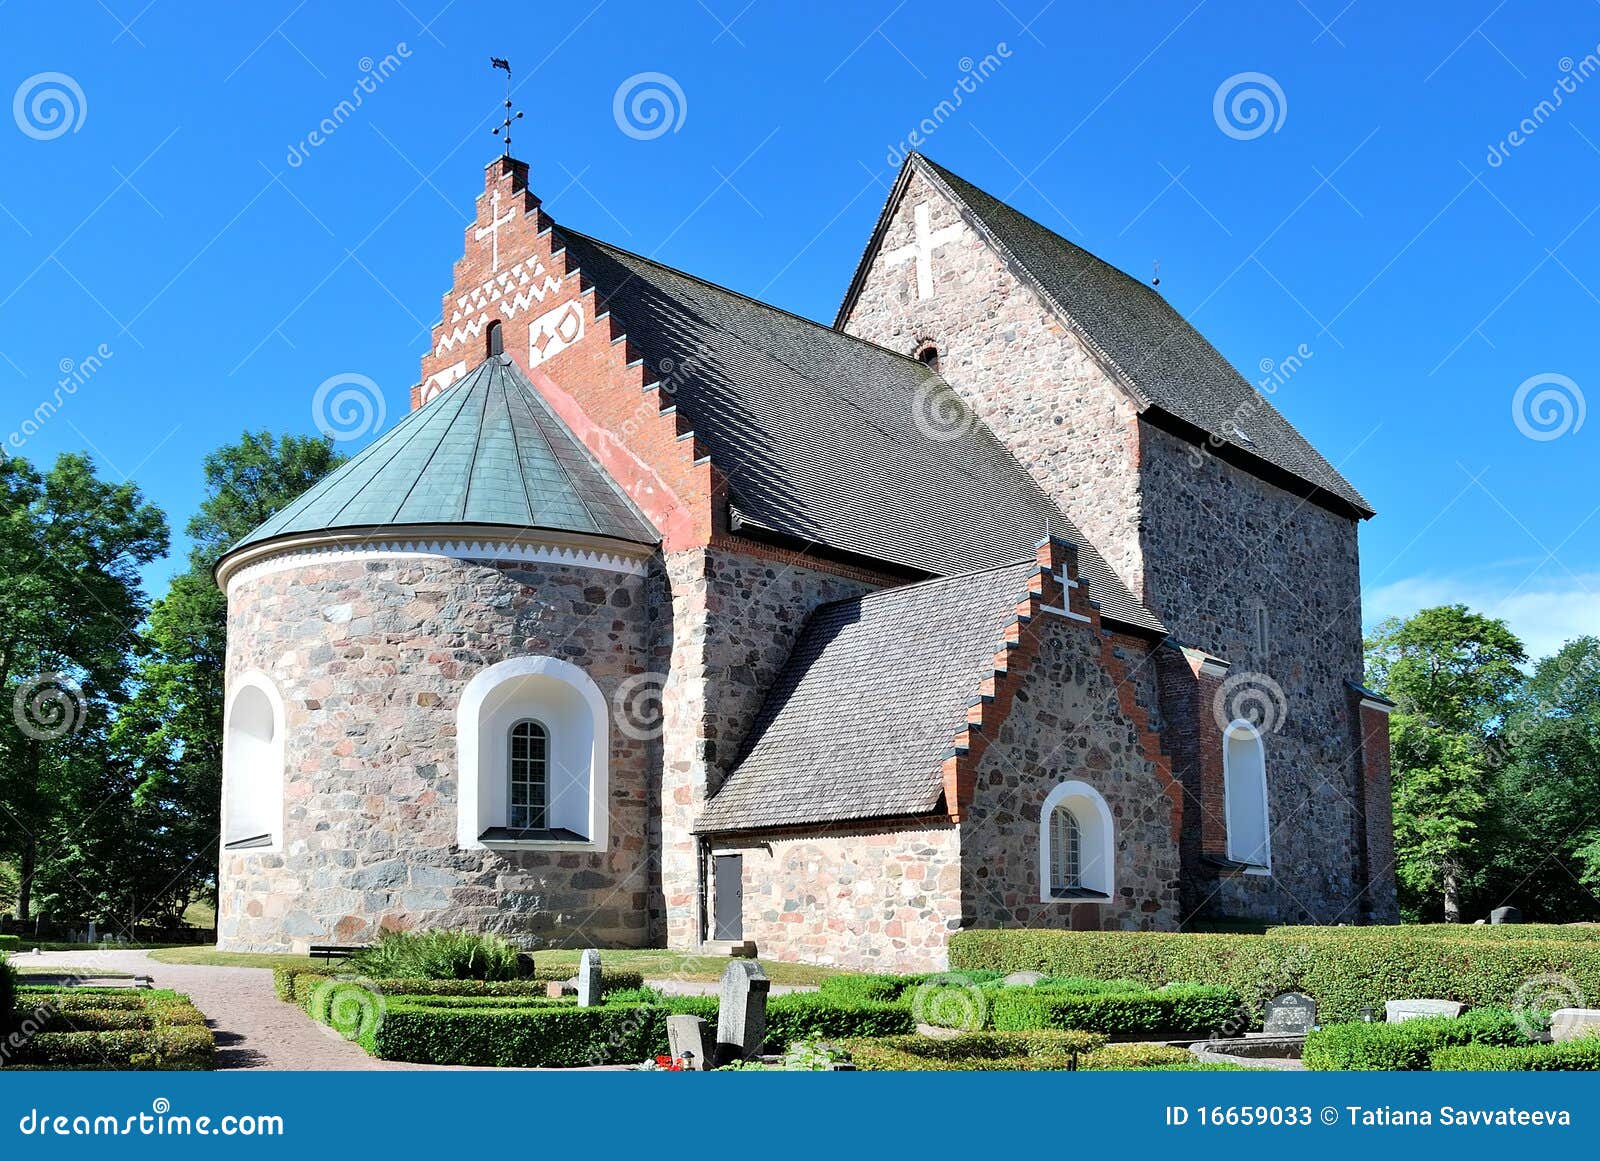 church of old uppsala